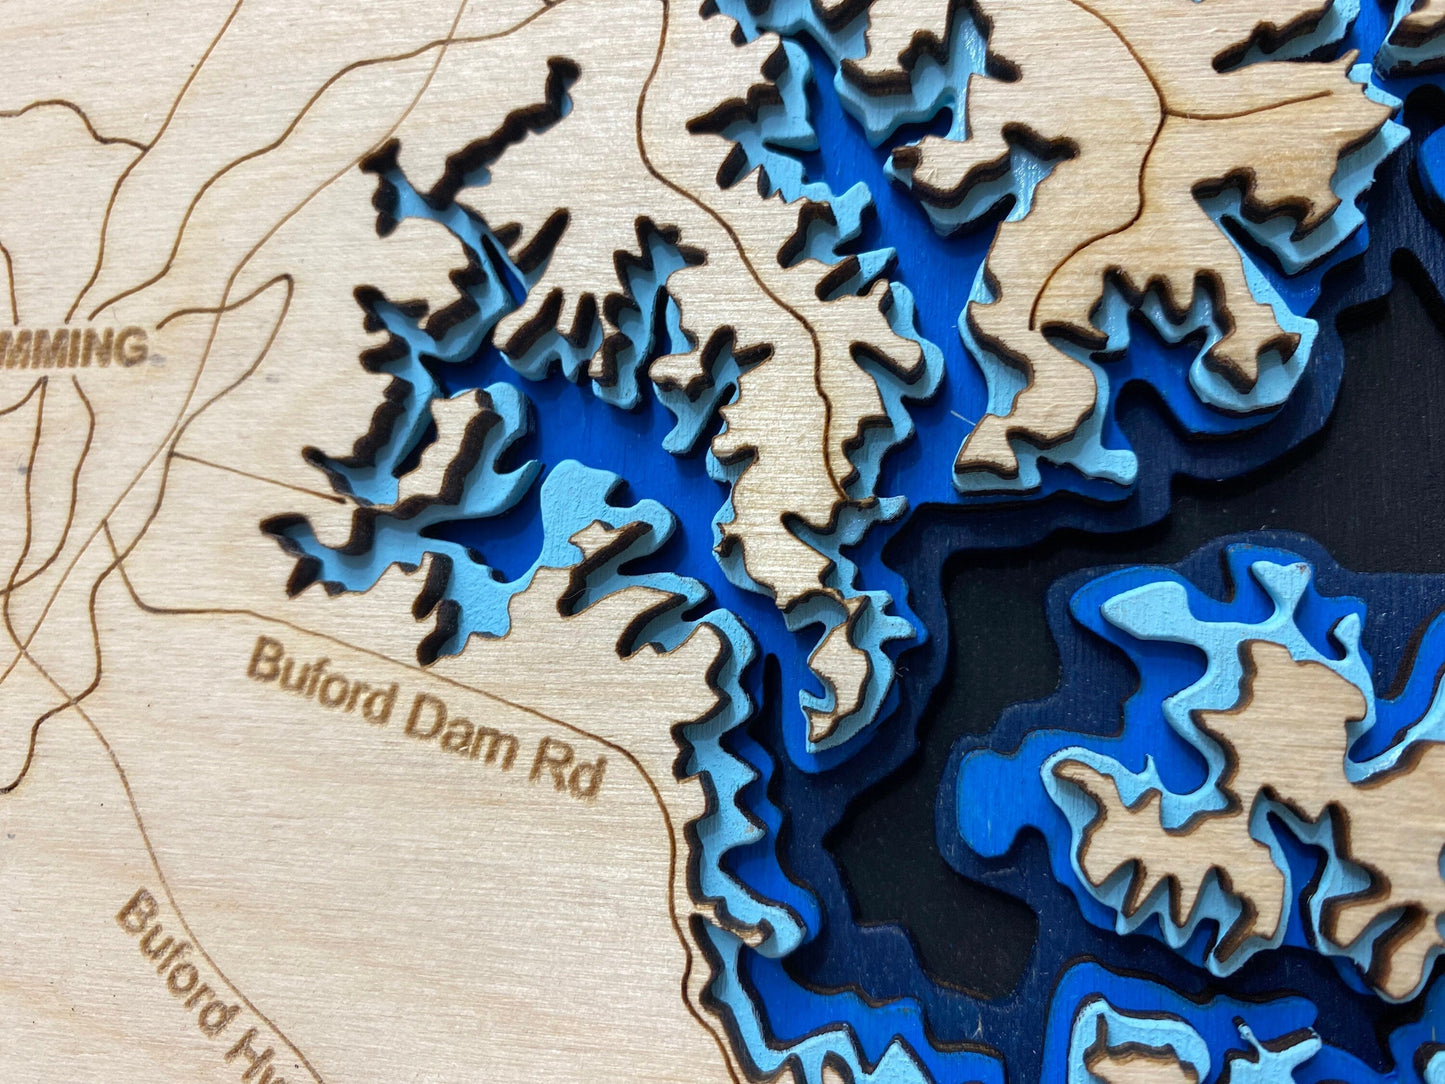 Lake Santeetlah 3D Framed Picture Map,  Wooden Engraved Map,